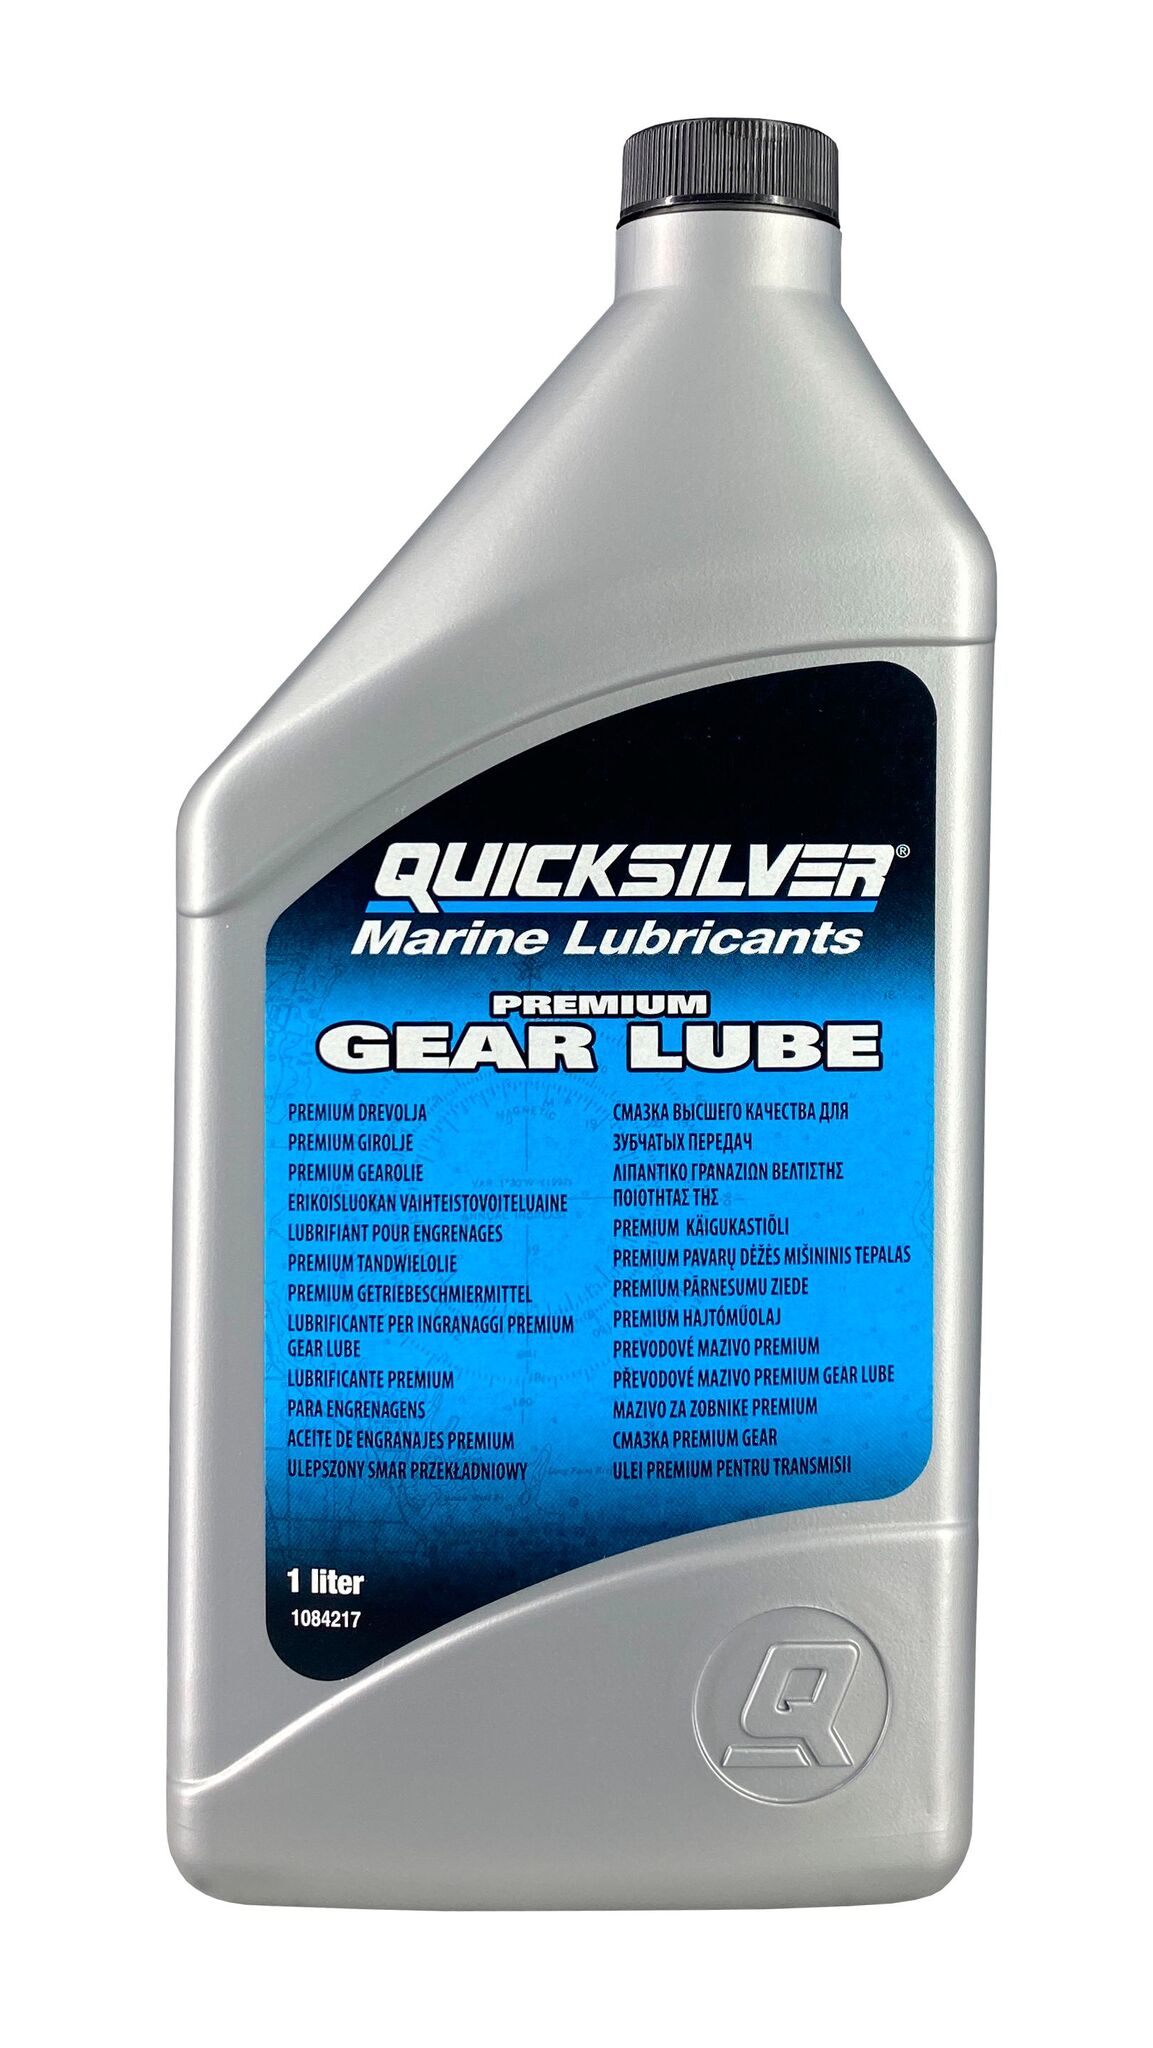 Quicksilver Gear Lube Premium SAE 90 1л. Масло Quicksilver High Performance Gear Lube трансмиссионное 1л. Масло редуктора Quicksilver Gear Lube Premium. Квиксильвер Gear Lube 80w90.